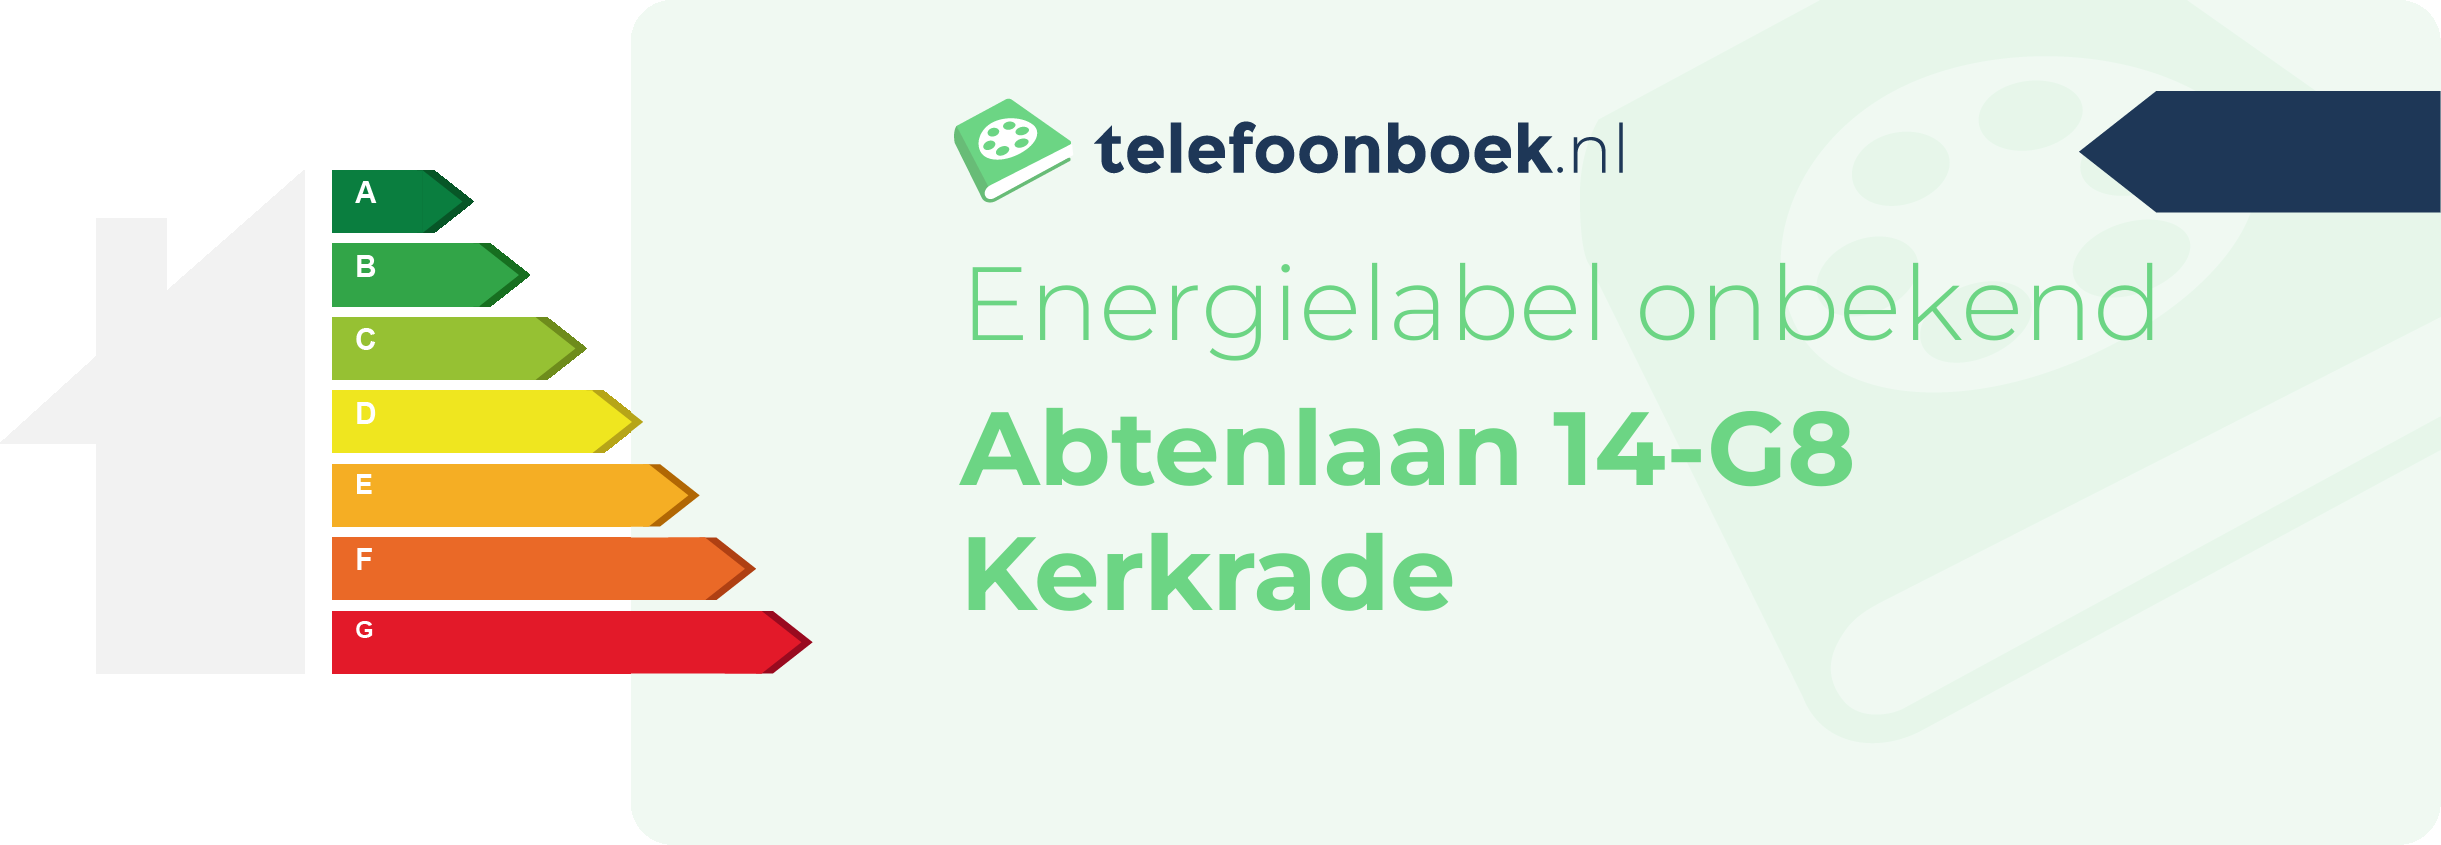 Energielabel Abtenlaan 14-G8 Kerkrade